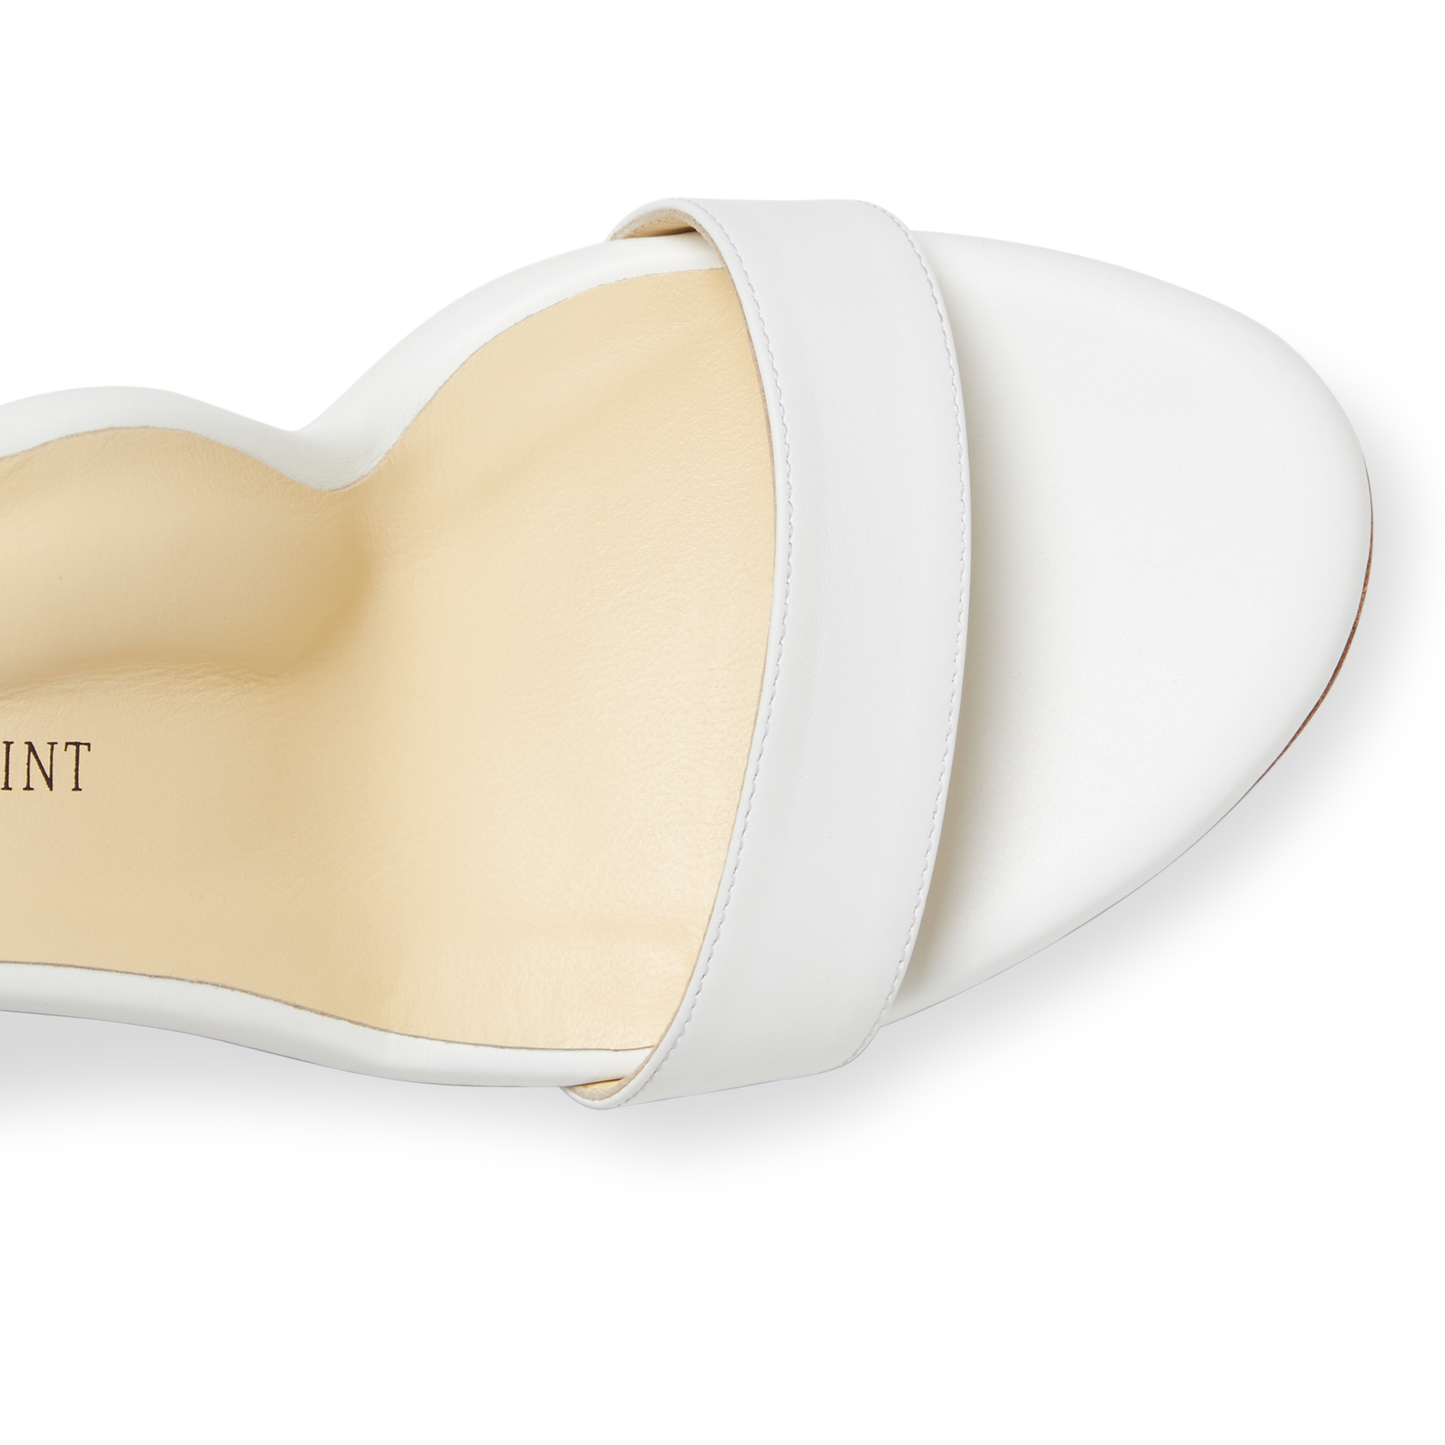 90mm Italian Made Perfect Block Sandal in White Calf